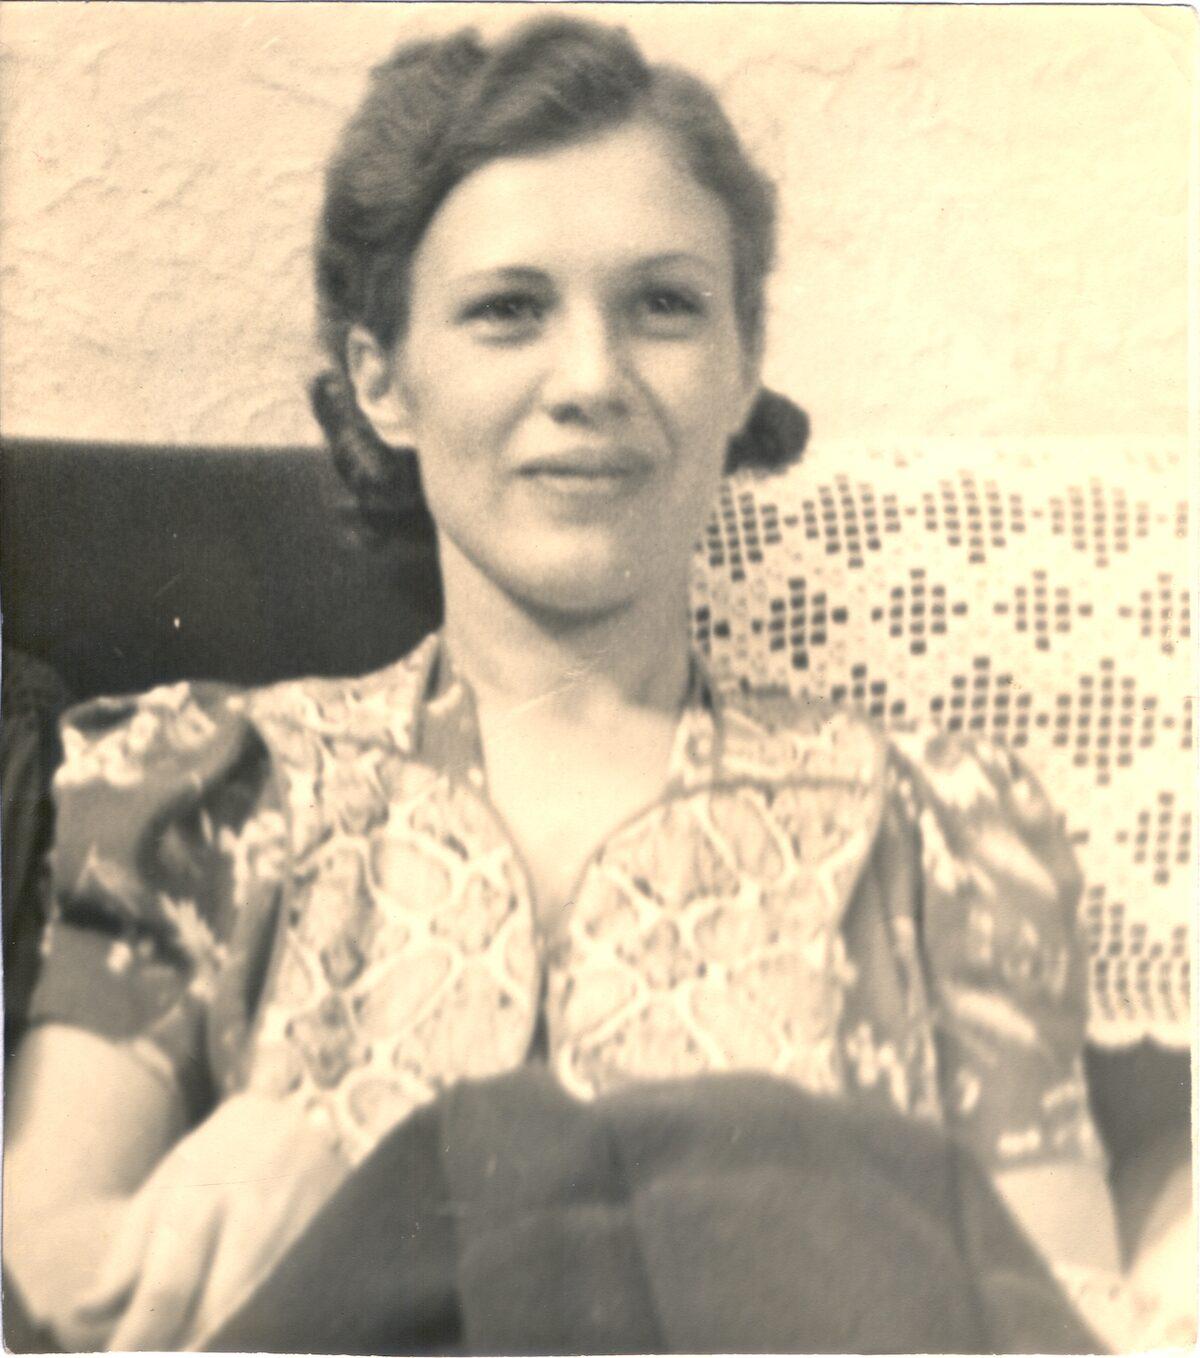 The author's grandmother Sigrid Asbjornsen Denyer. (Courtesy of Doris Richardson)